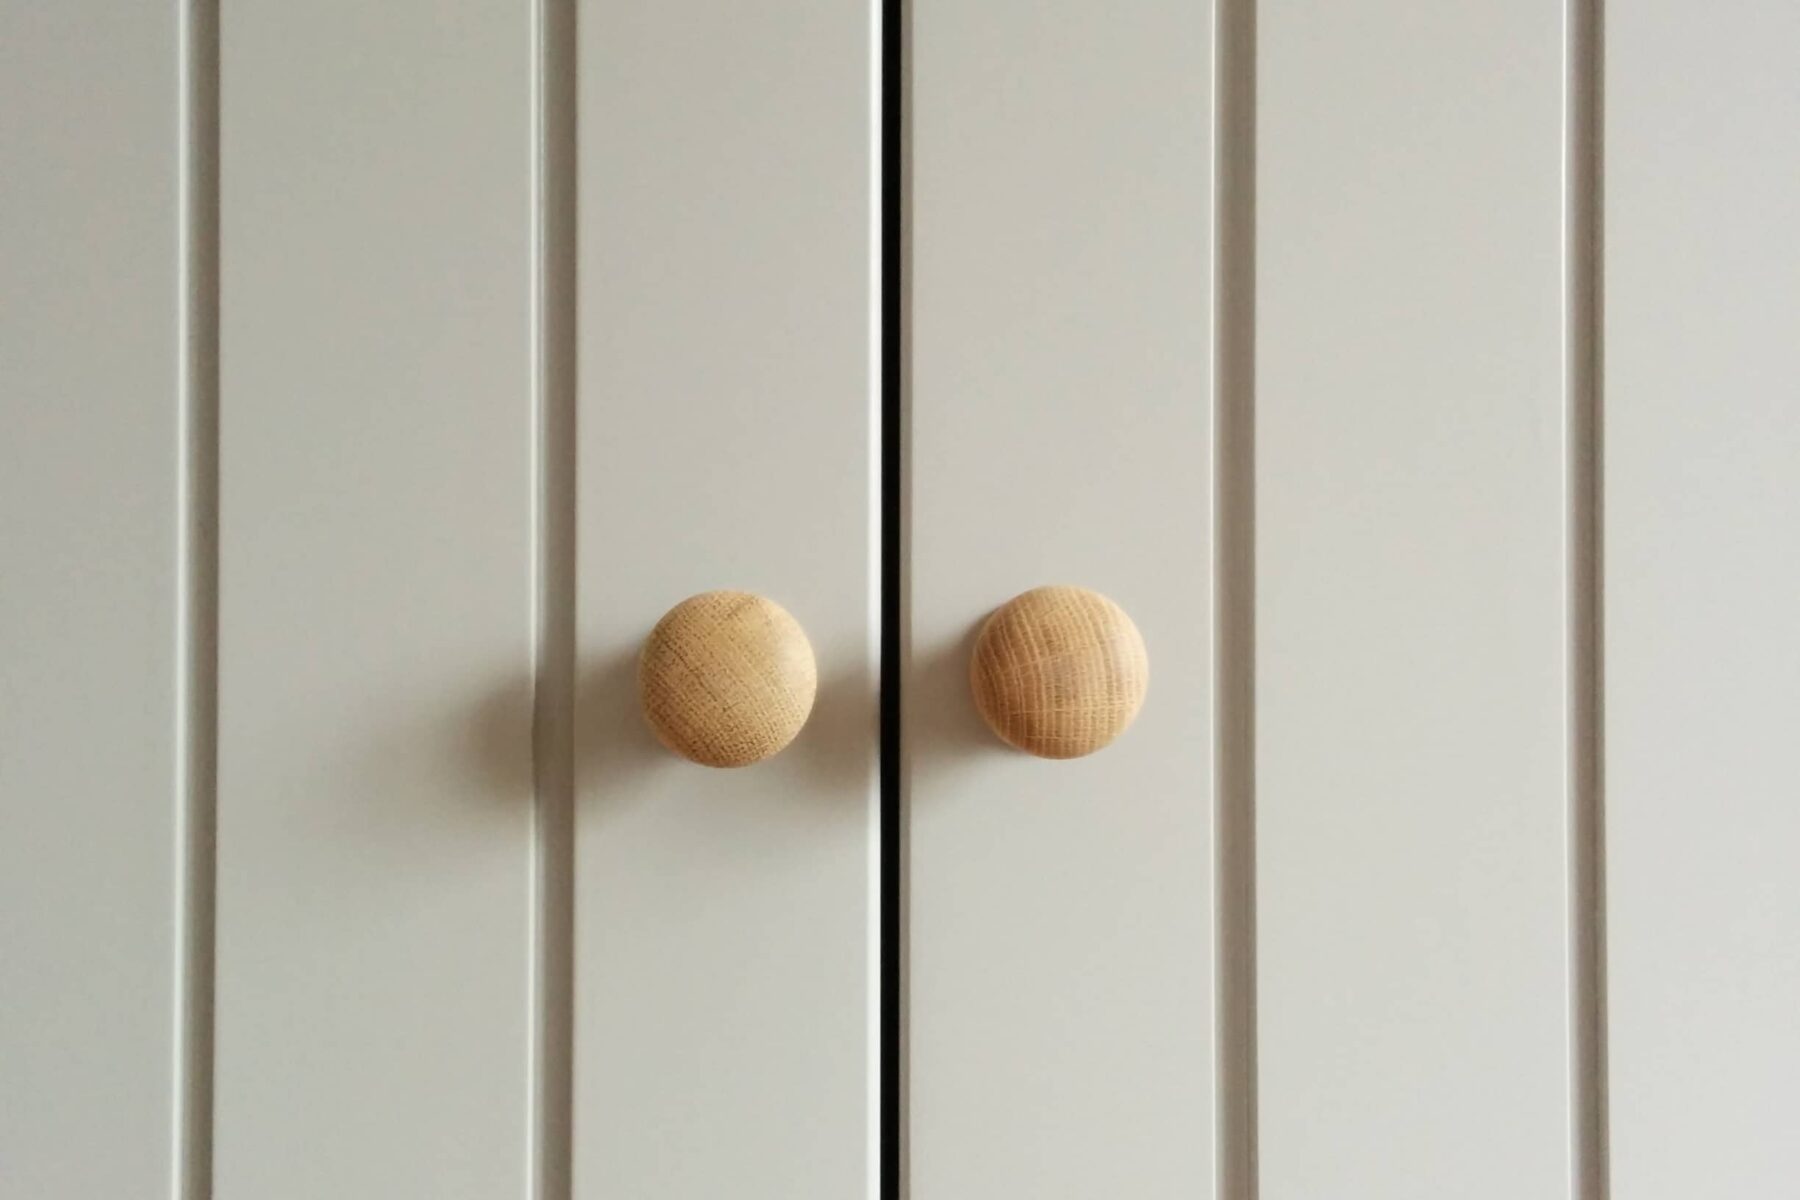 Country wardrobe doors and wooden handles